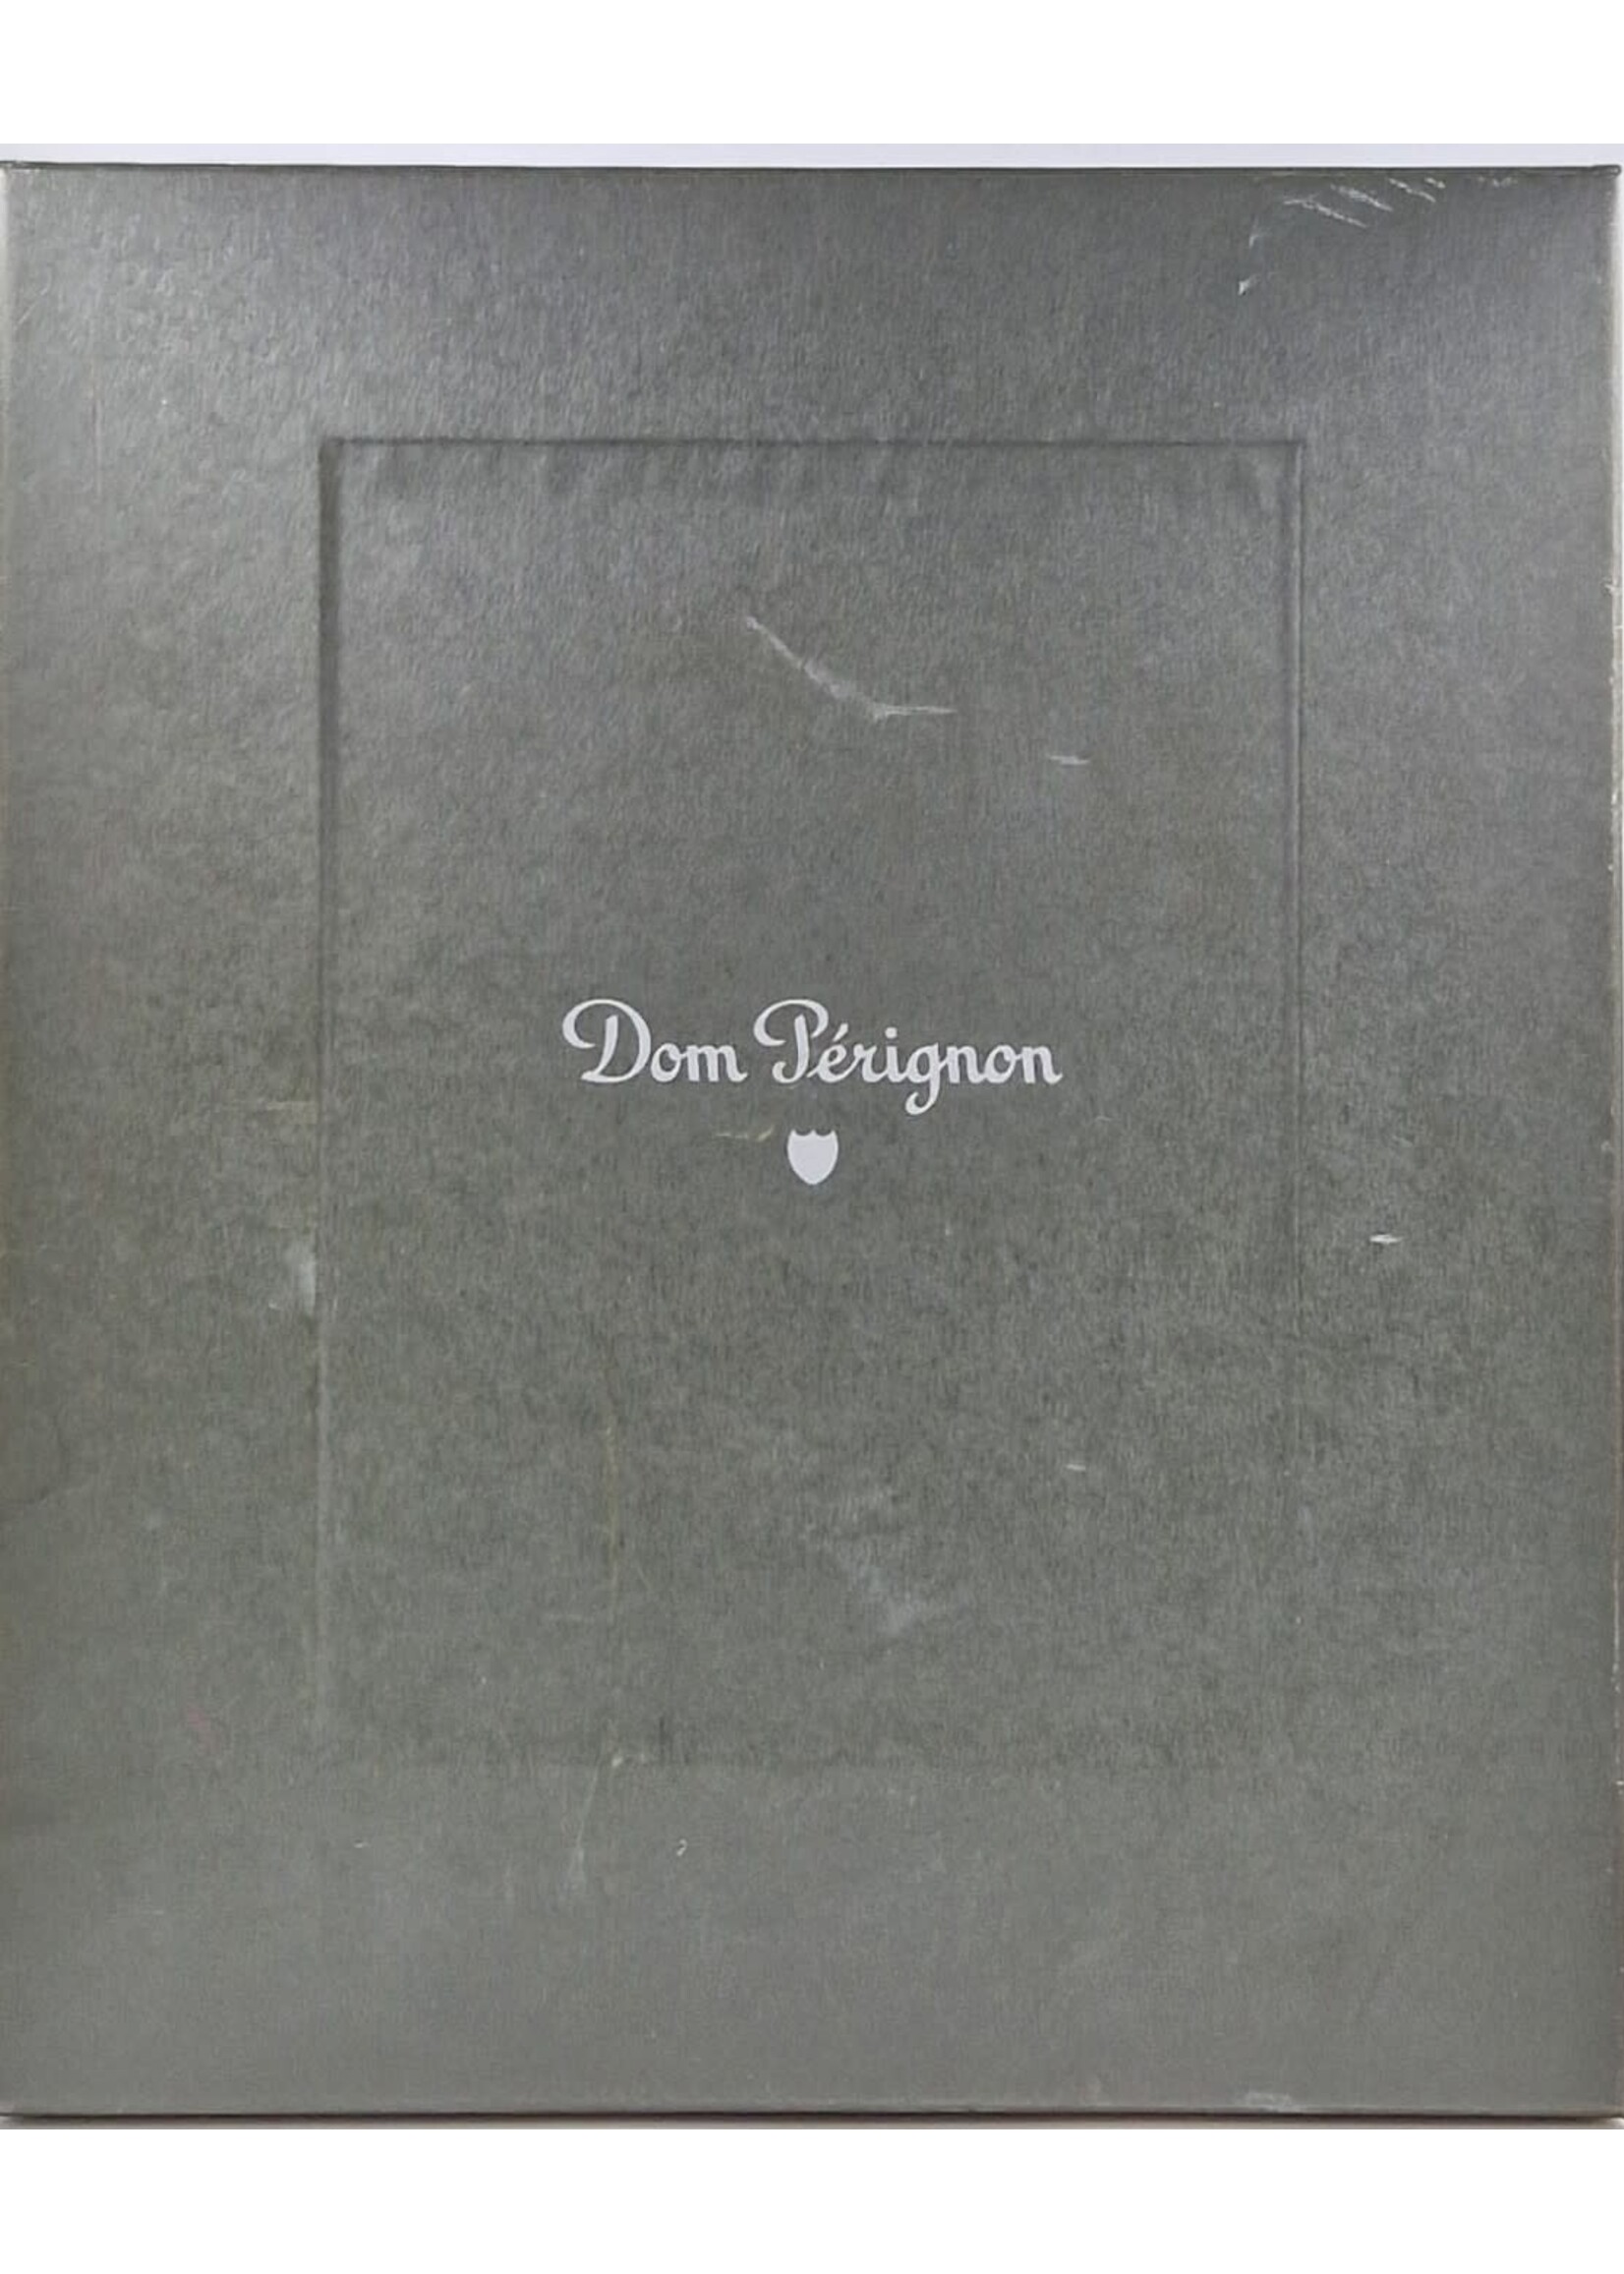 1996 Dom Perignon Moet & Chandon Giftbox with 2 glasses